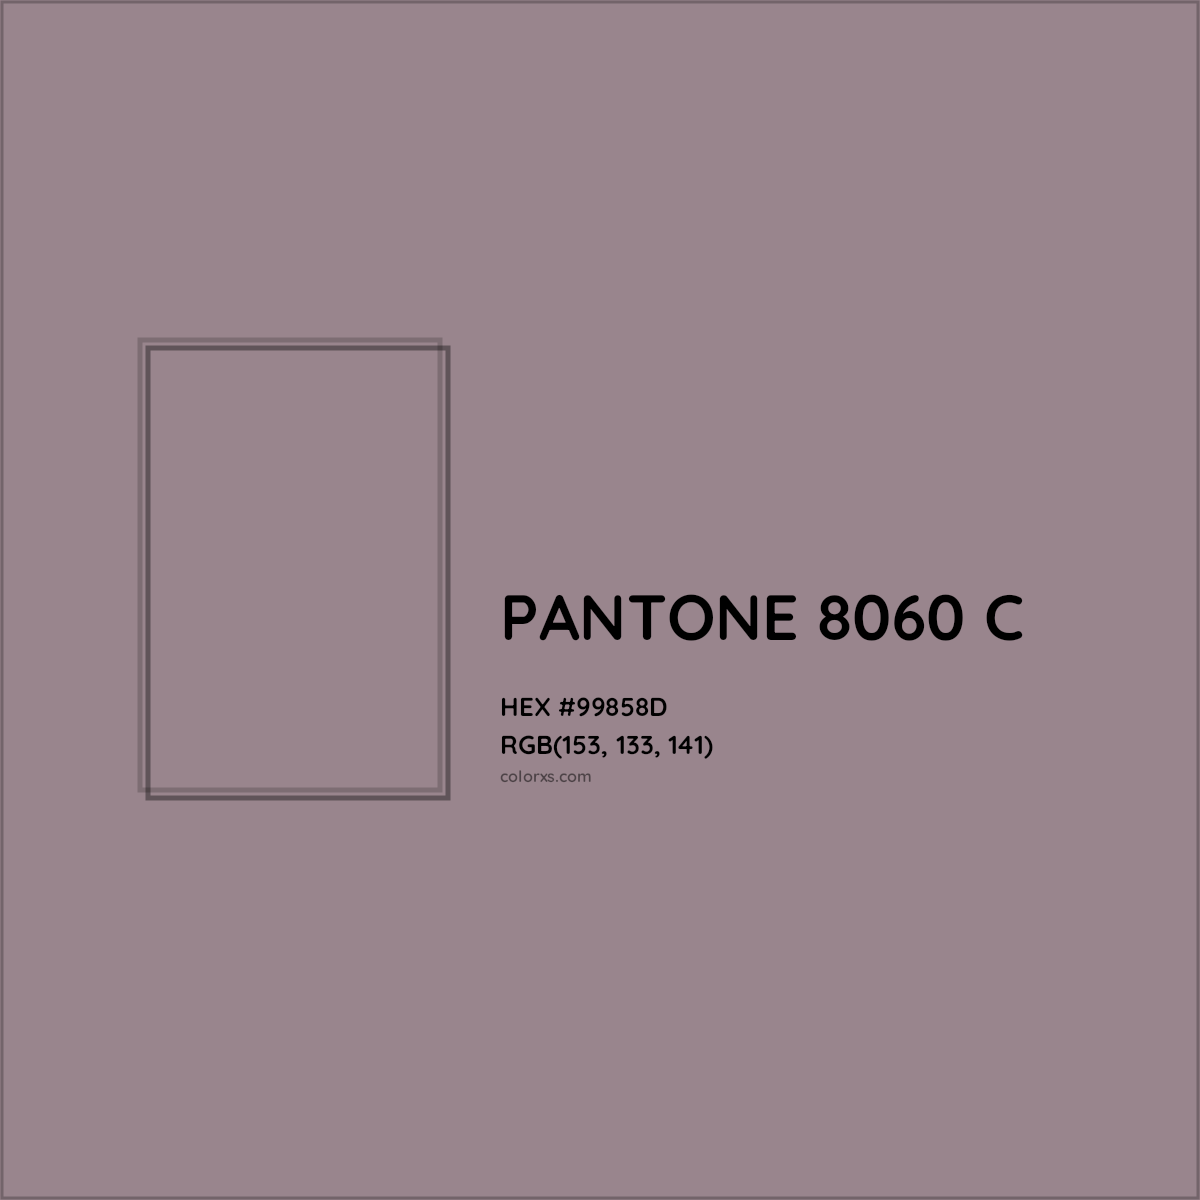 HEX #99858D PANTONE 8060 C CMS Pantone PMS - Color Code